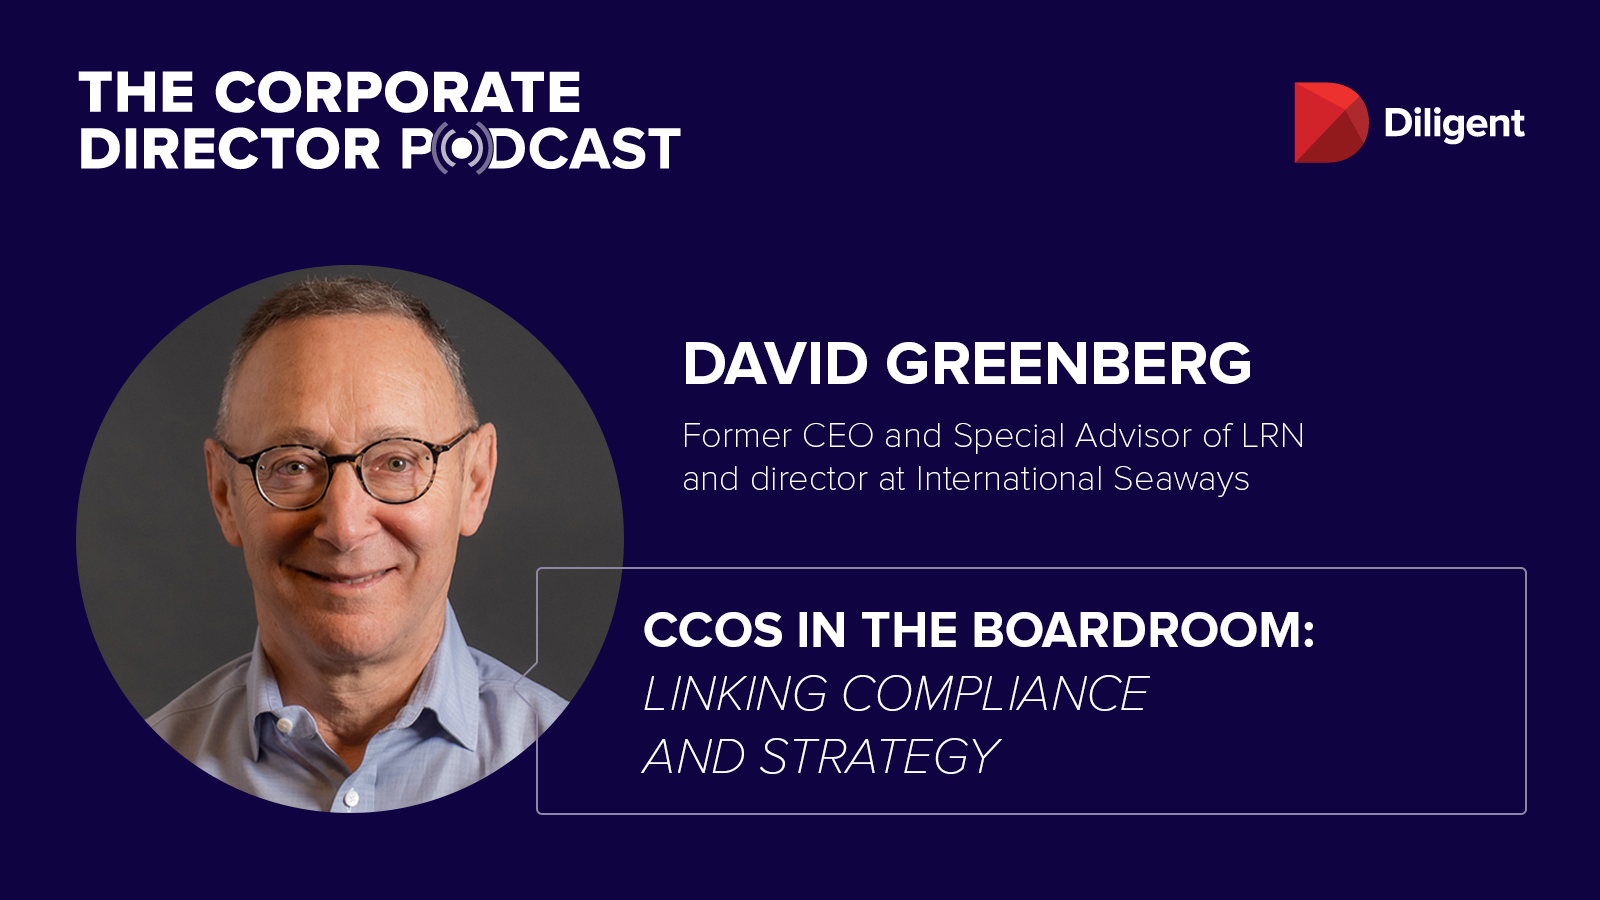 Diligent Corporate Director Podcast - David Greenberg